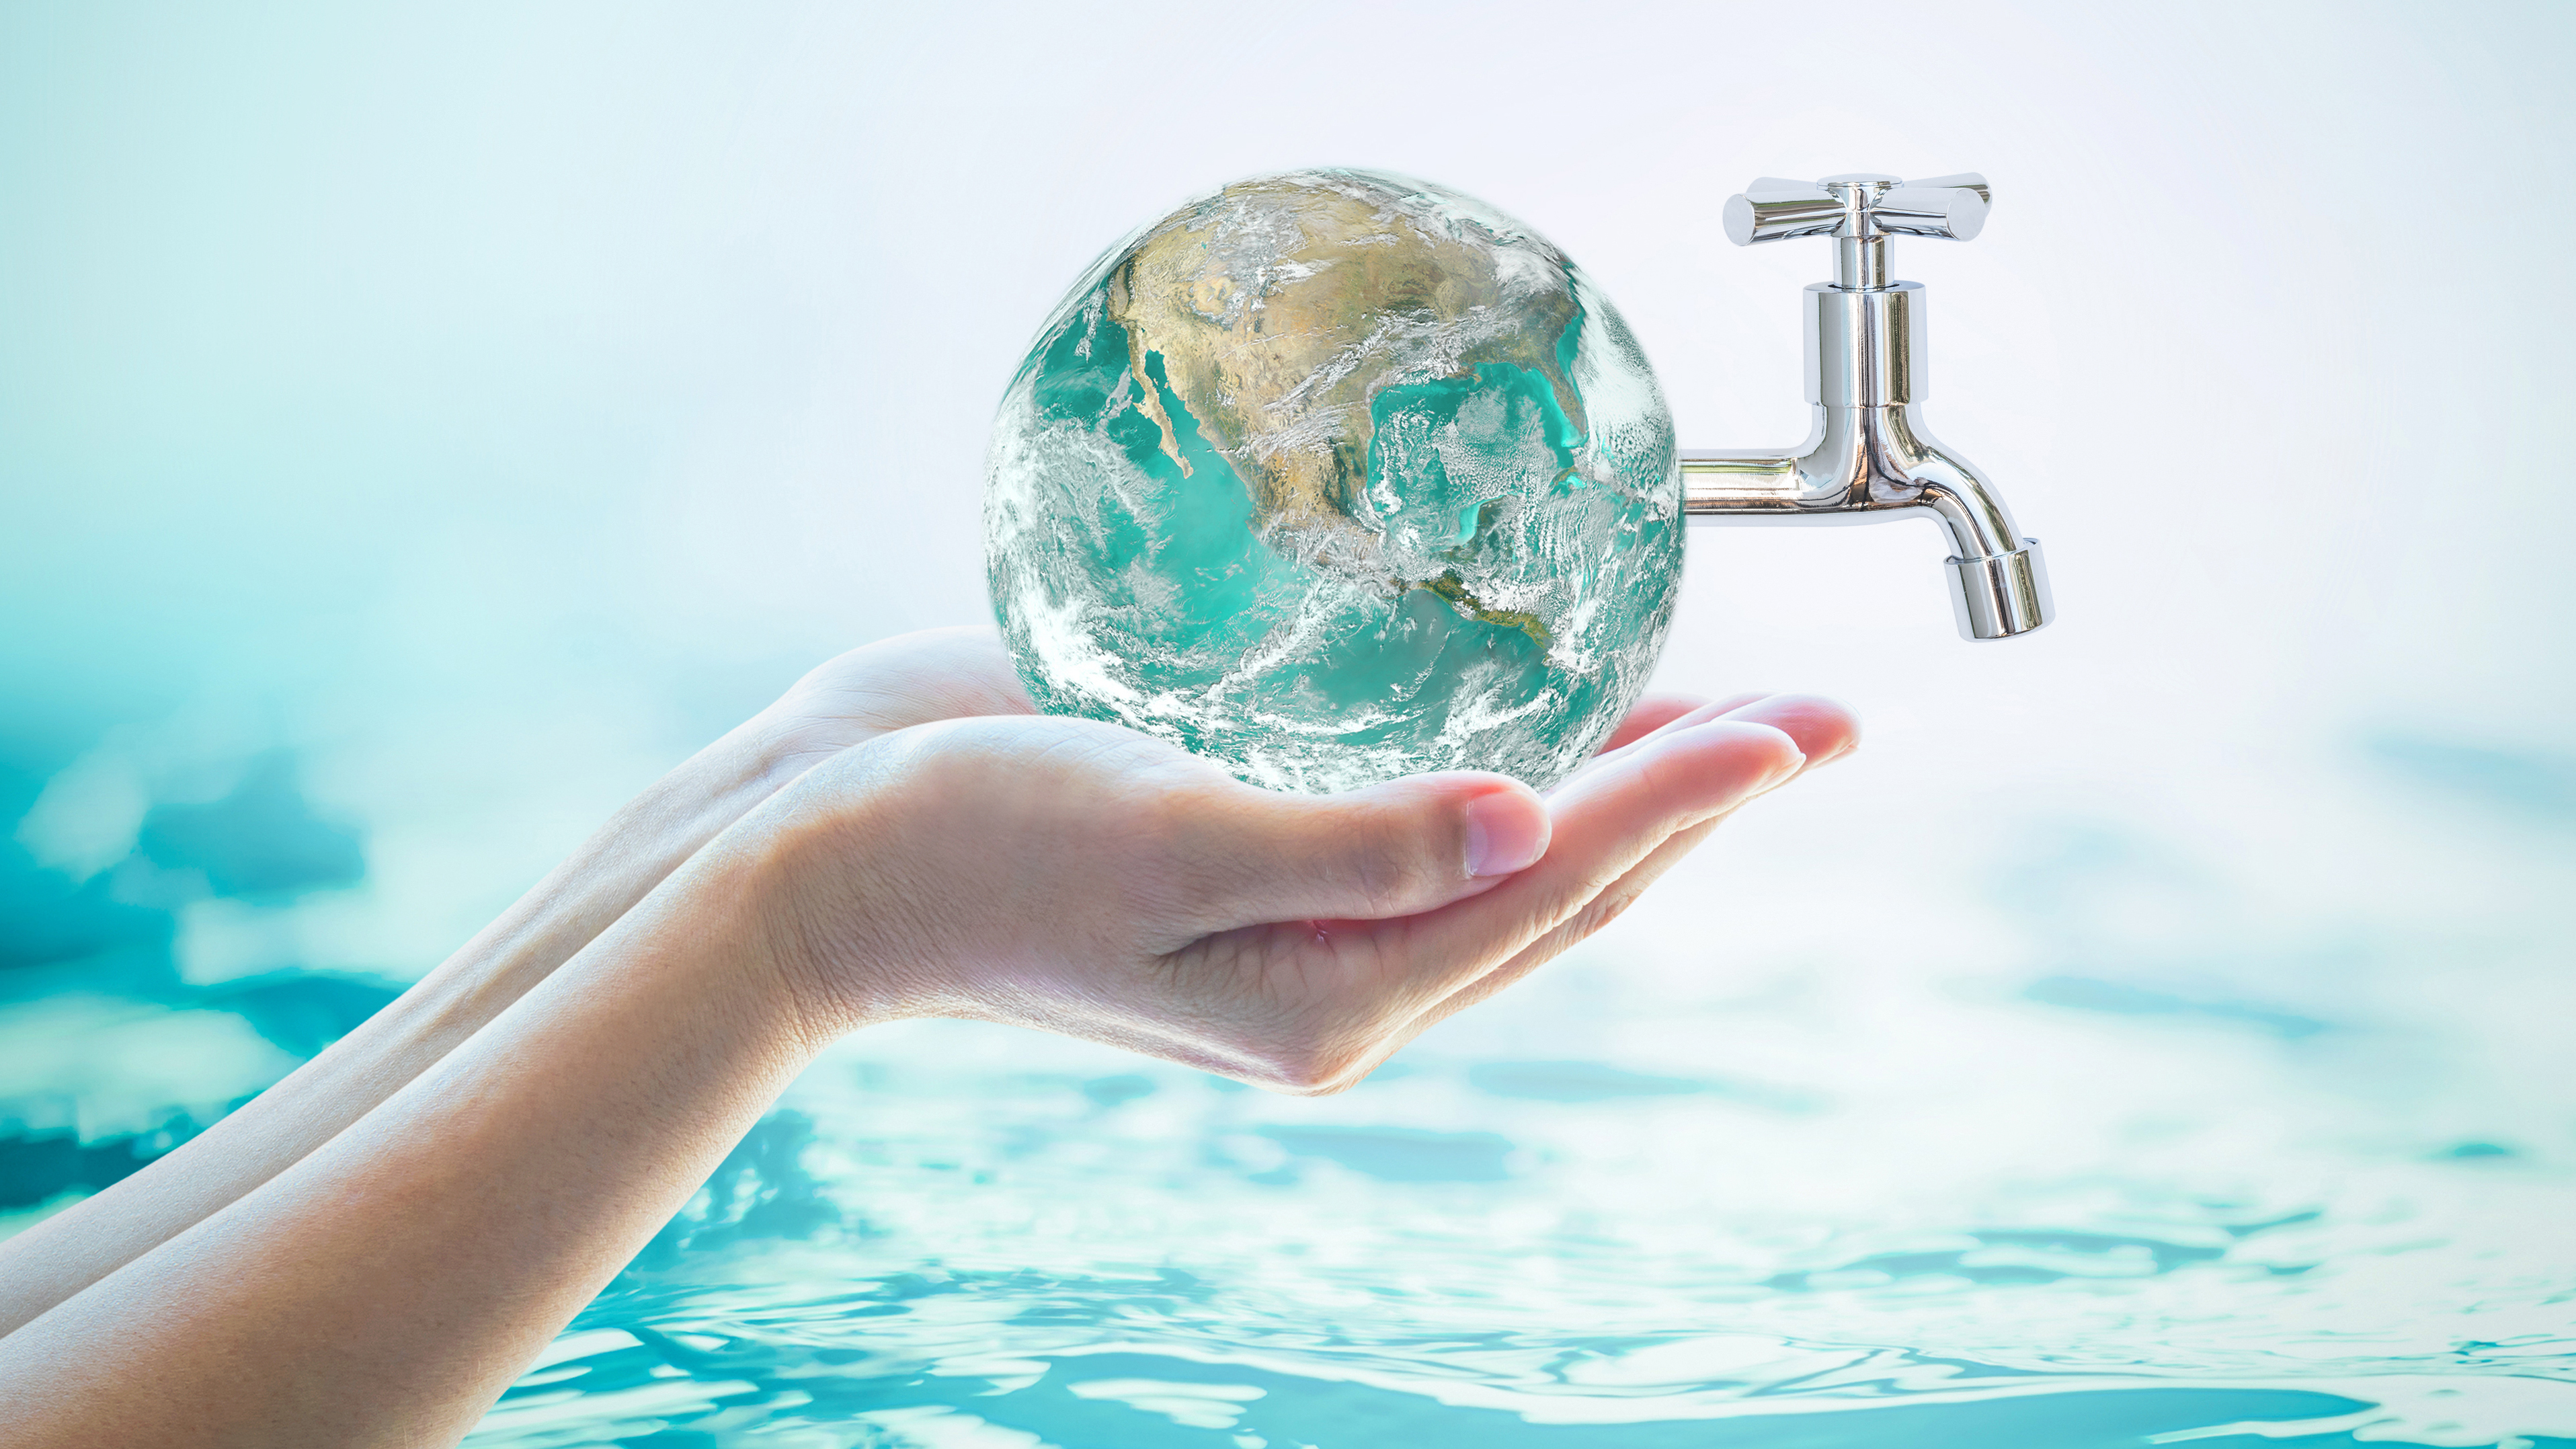 Aprender a cuidar el agua es fundamental para la vida (Shutterstock)